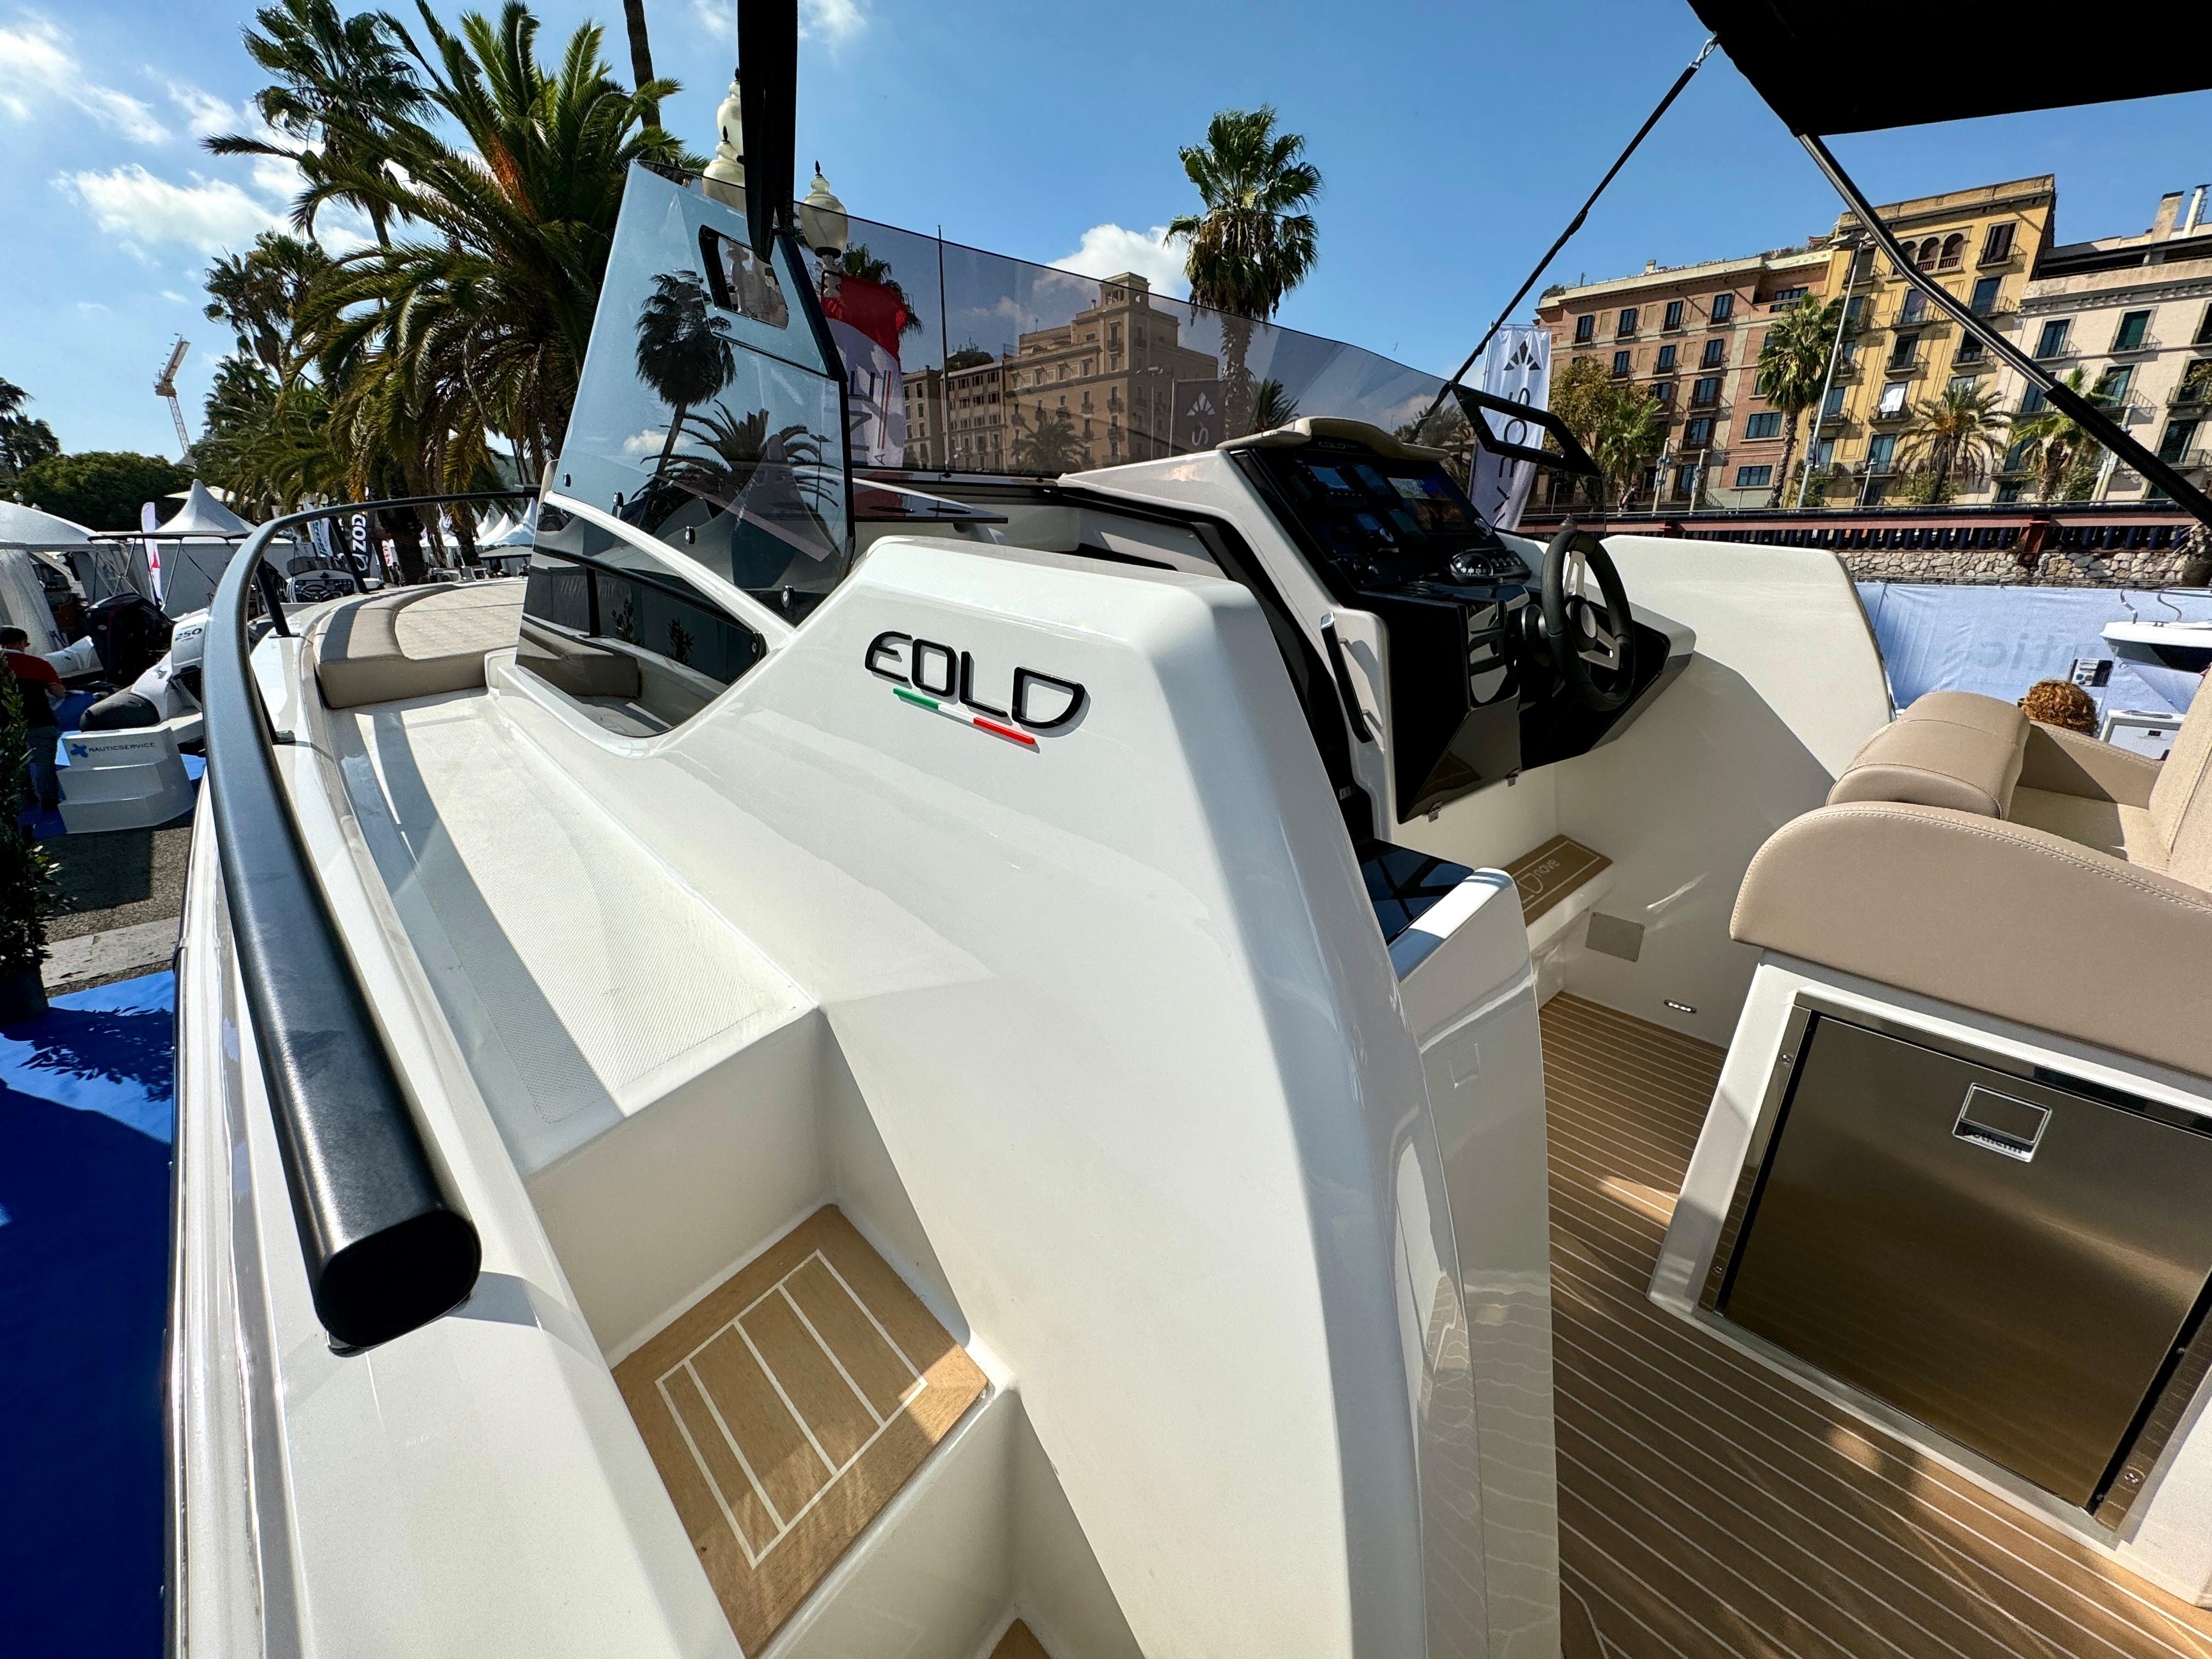 2023 Eolo Nove Cruiser for sale - YachtWorld